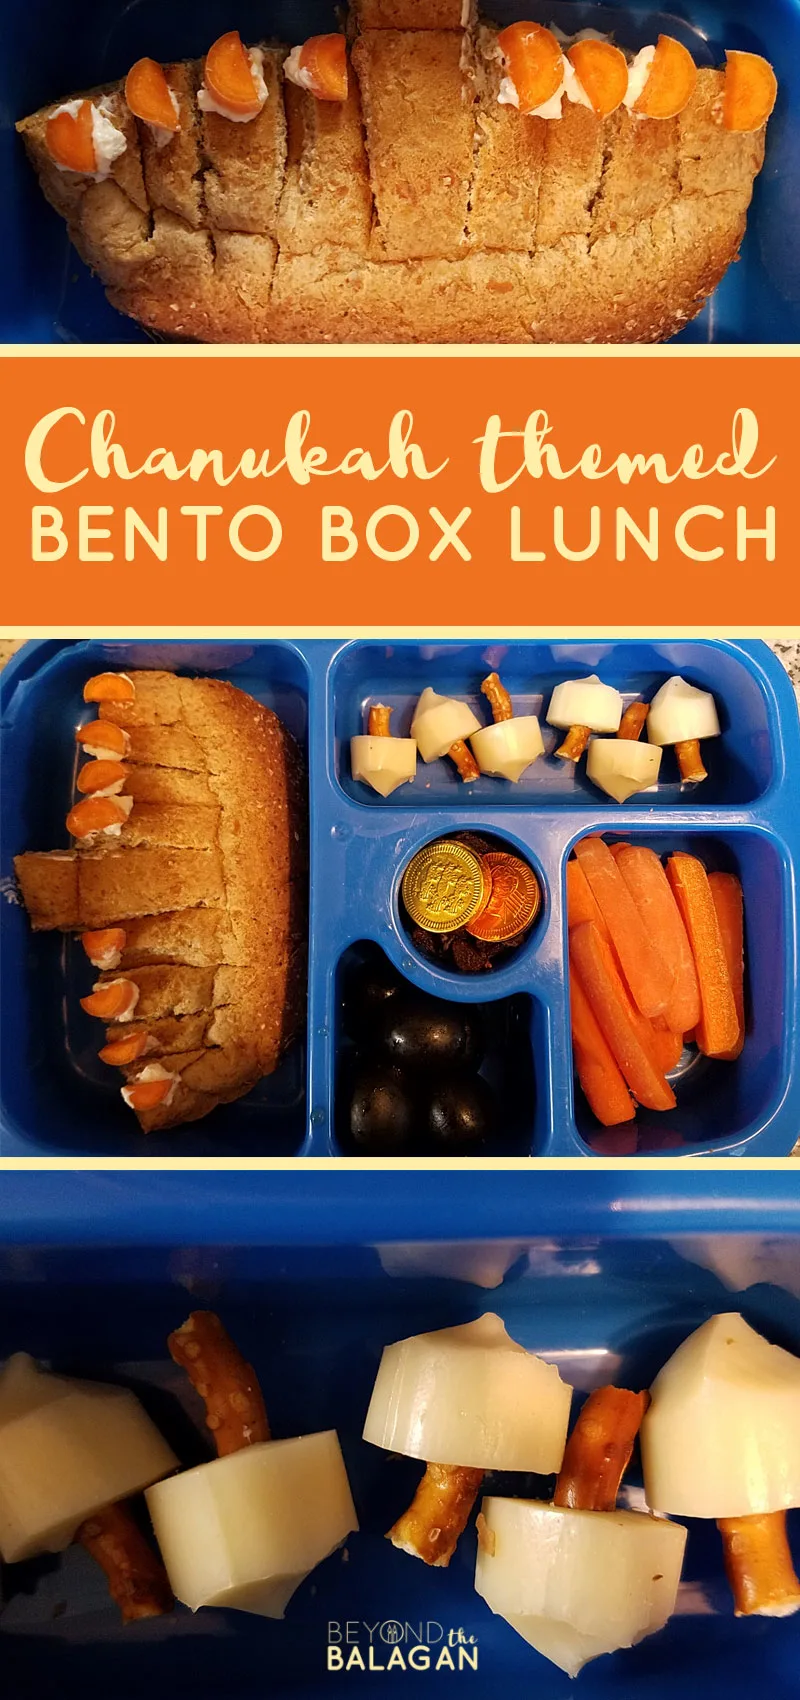 Click for this Chanukah lunch bento box idea - a fun Hanukkah food idea for kids! #hanukkah #chanukah